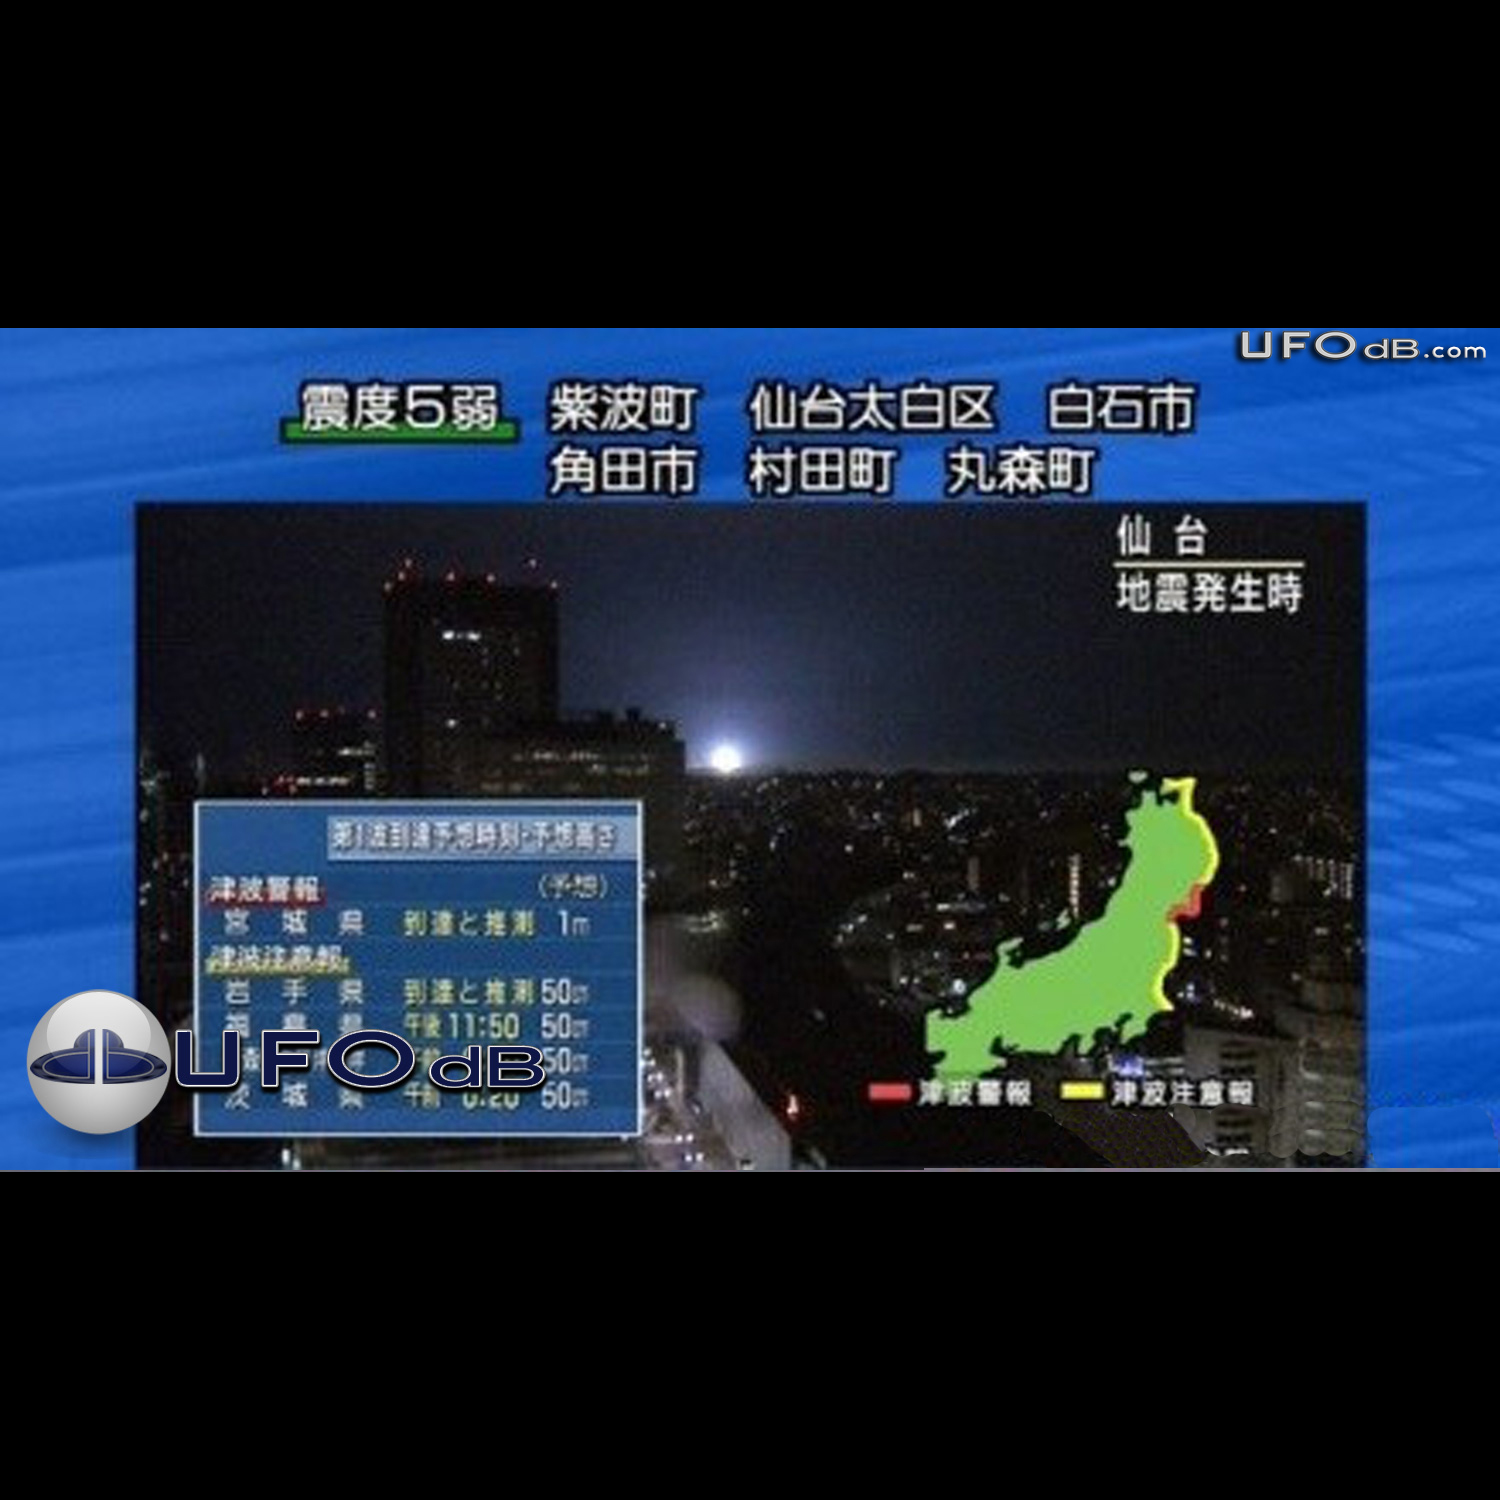 NHK TV News show earthquake strange UFO light | Japan | April 7 2011 UFO Picture #293-1